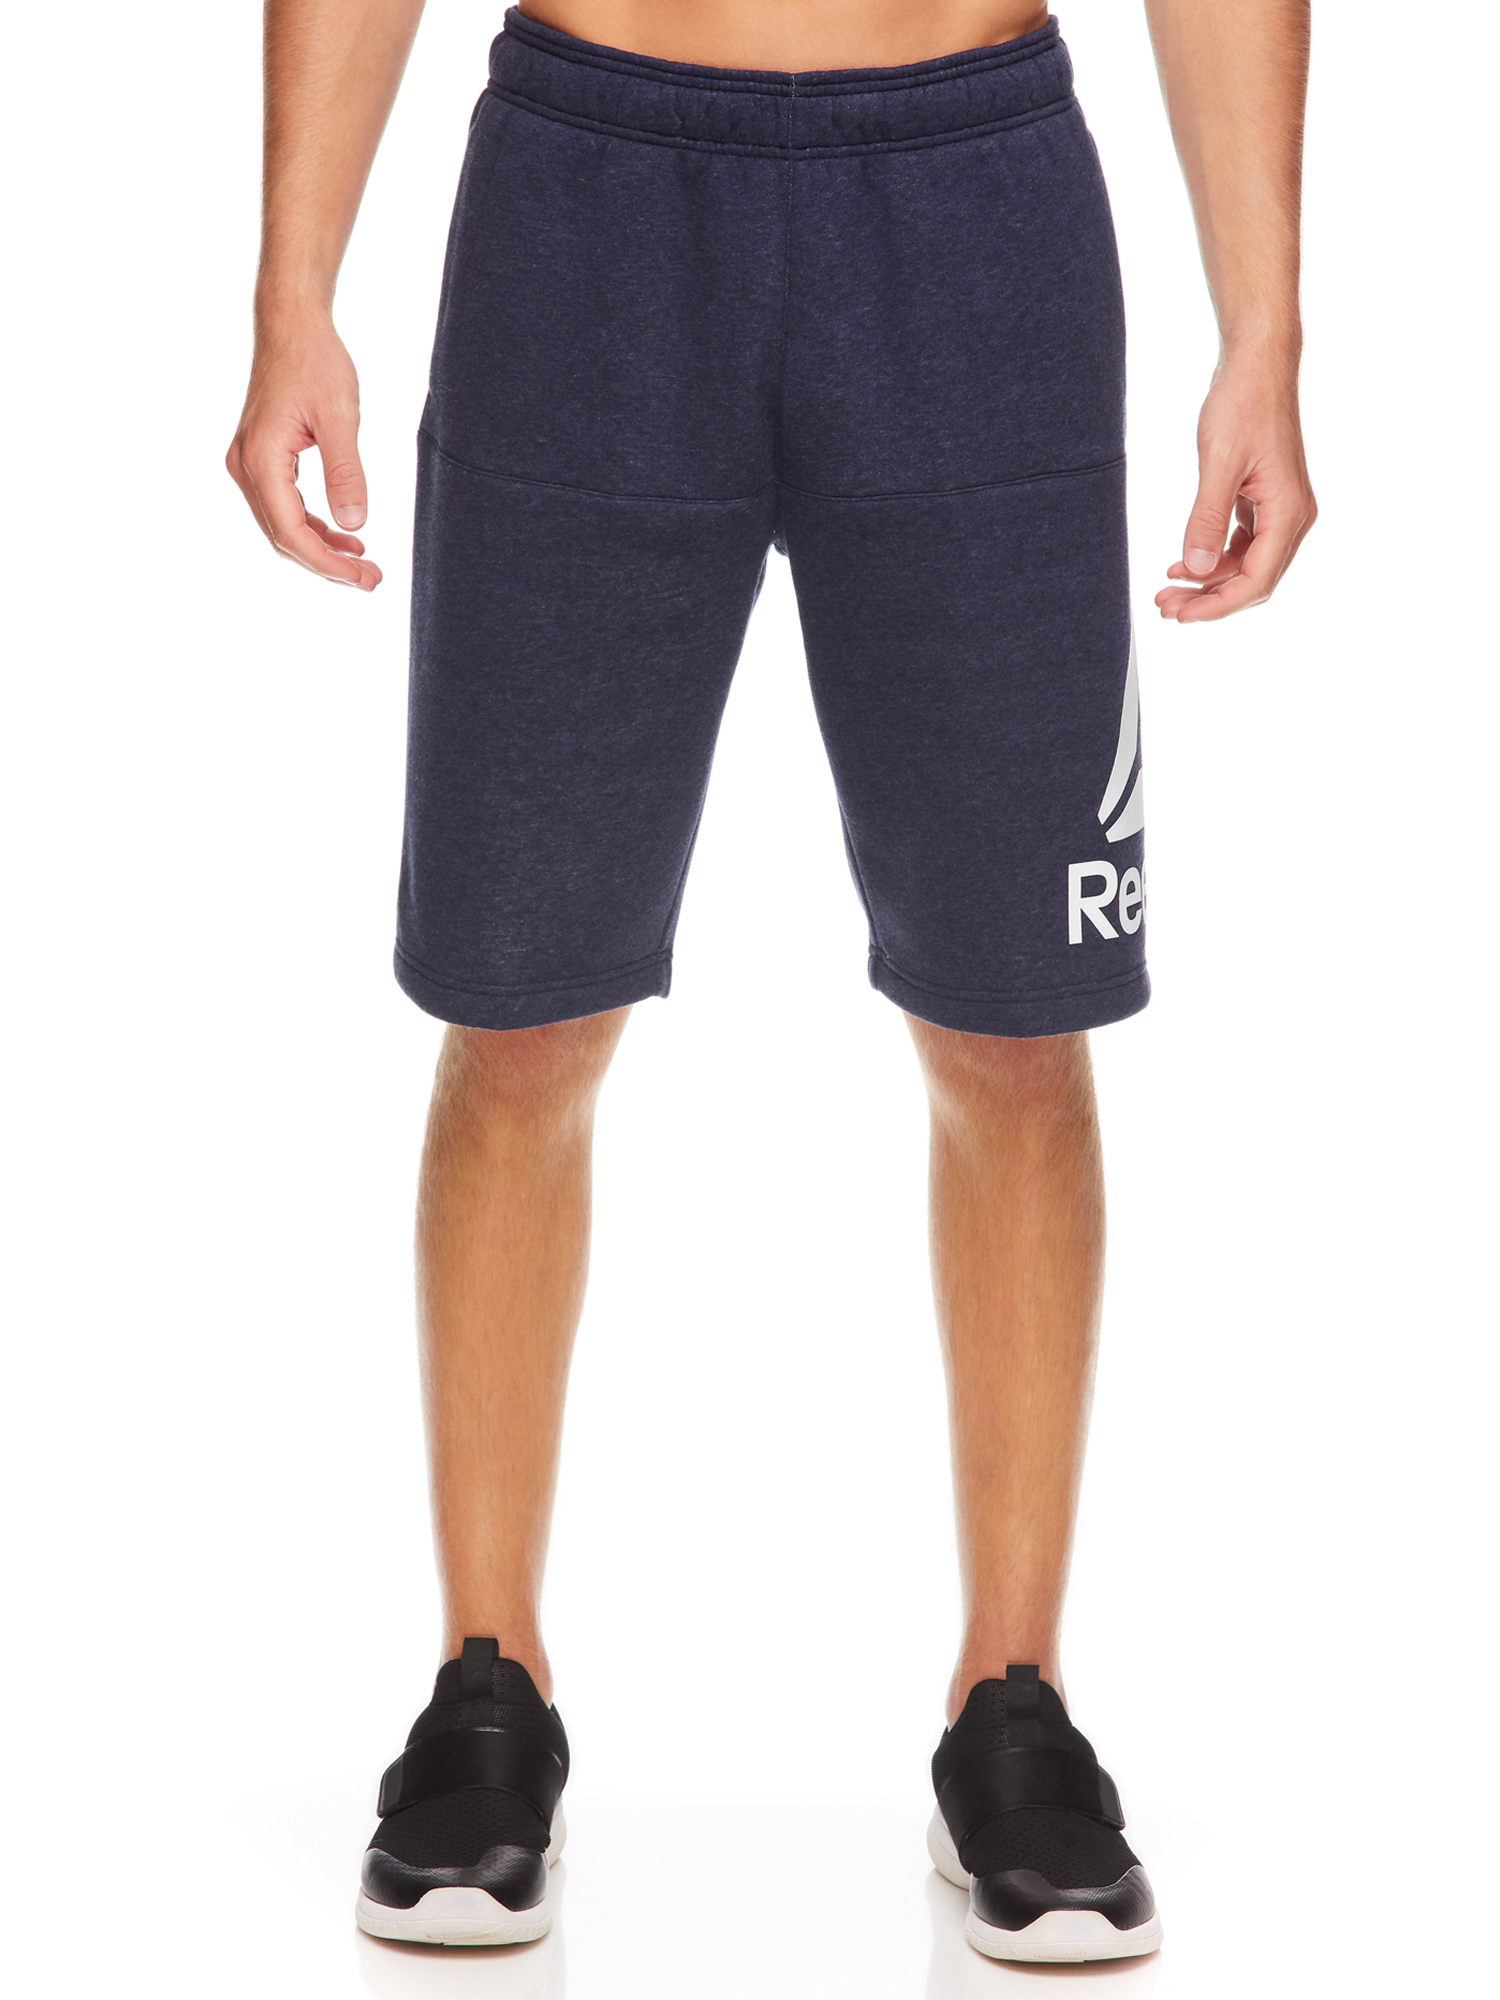 Reebok Men's Low Lift Fleece Shorts - image 1 of 4